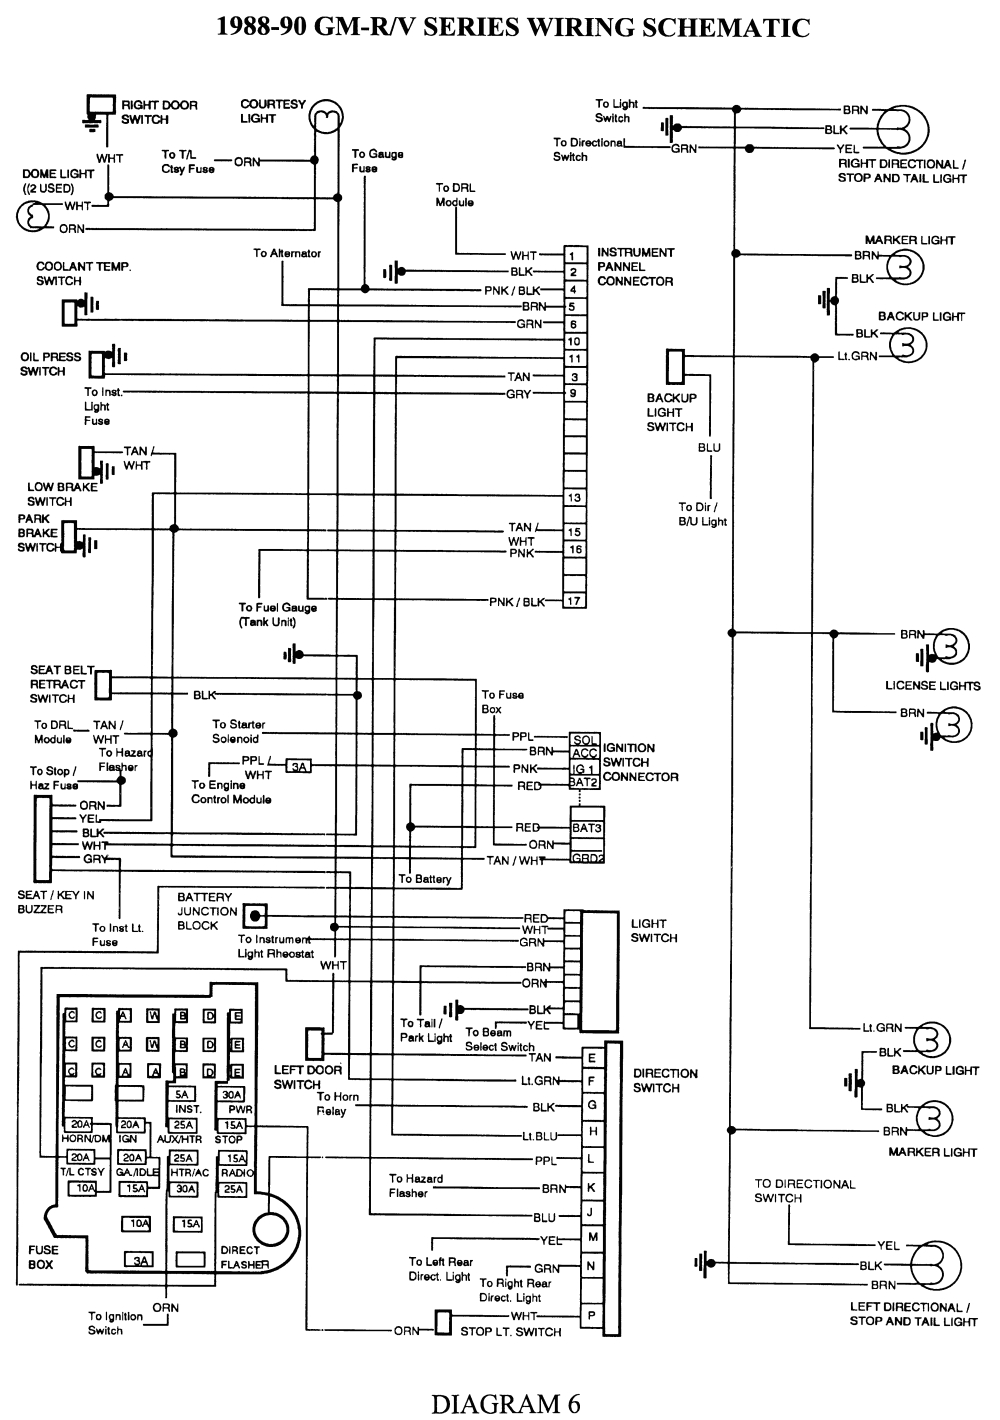 2005 Chevy Silverado Brake Light Wiring Diagram Repair Guides Wiring Diagrams Wiring Diagrams Autozone Com